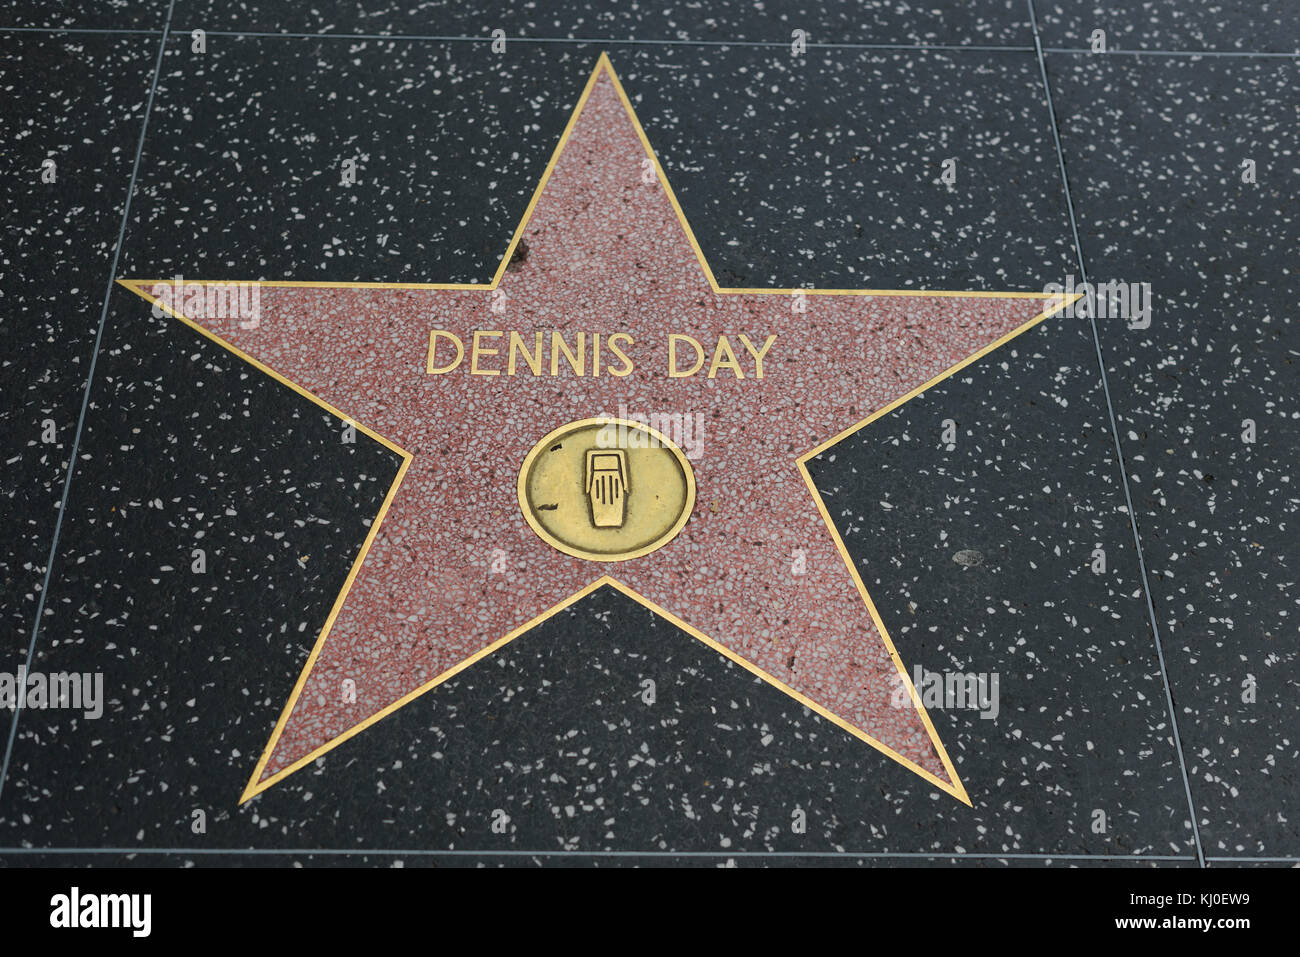 HOLLYWOOD, CA - DEZEMBER 06: Dennis Day Star auf dem Hollywood Walk of Fame in Hollywood, Kalifornien am 6. Dezember 2016. Stockfoto